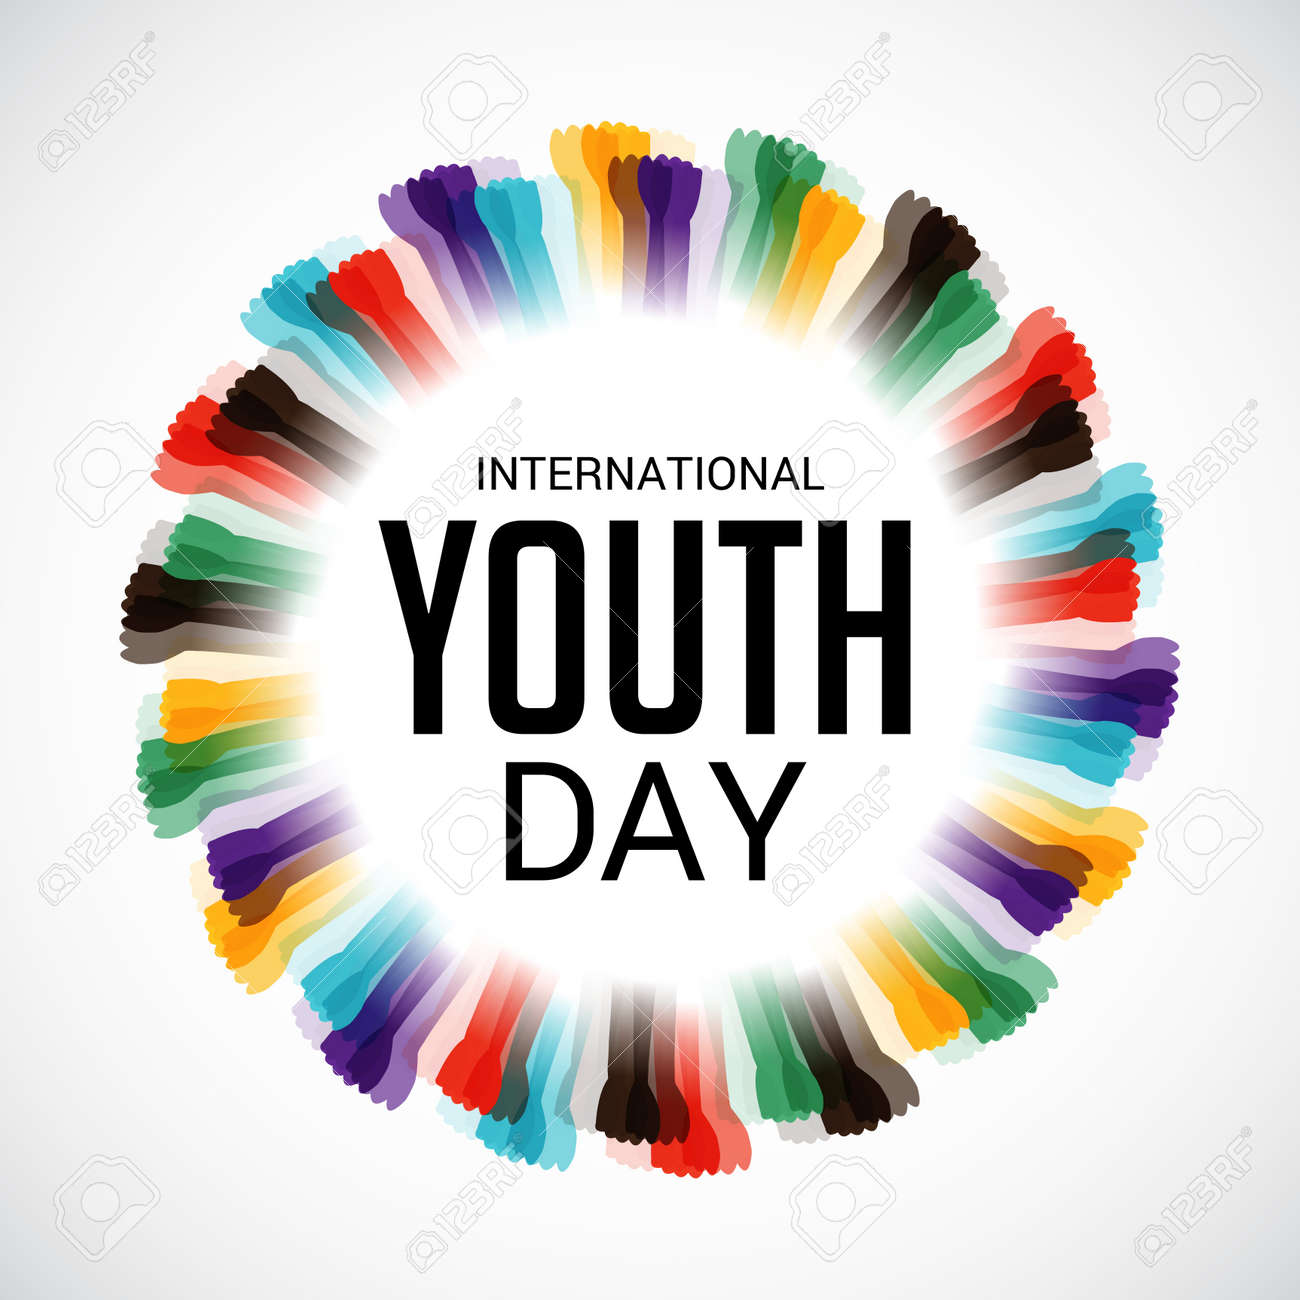 International Youth day. La journée international de la jeunesse. (c) shinystarfish via 123RF.com